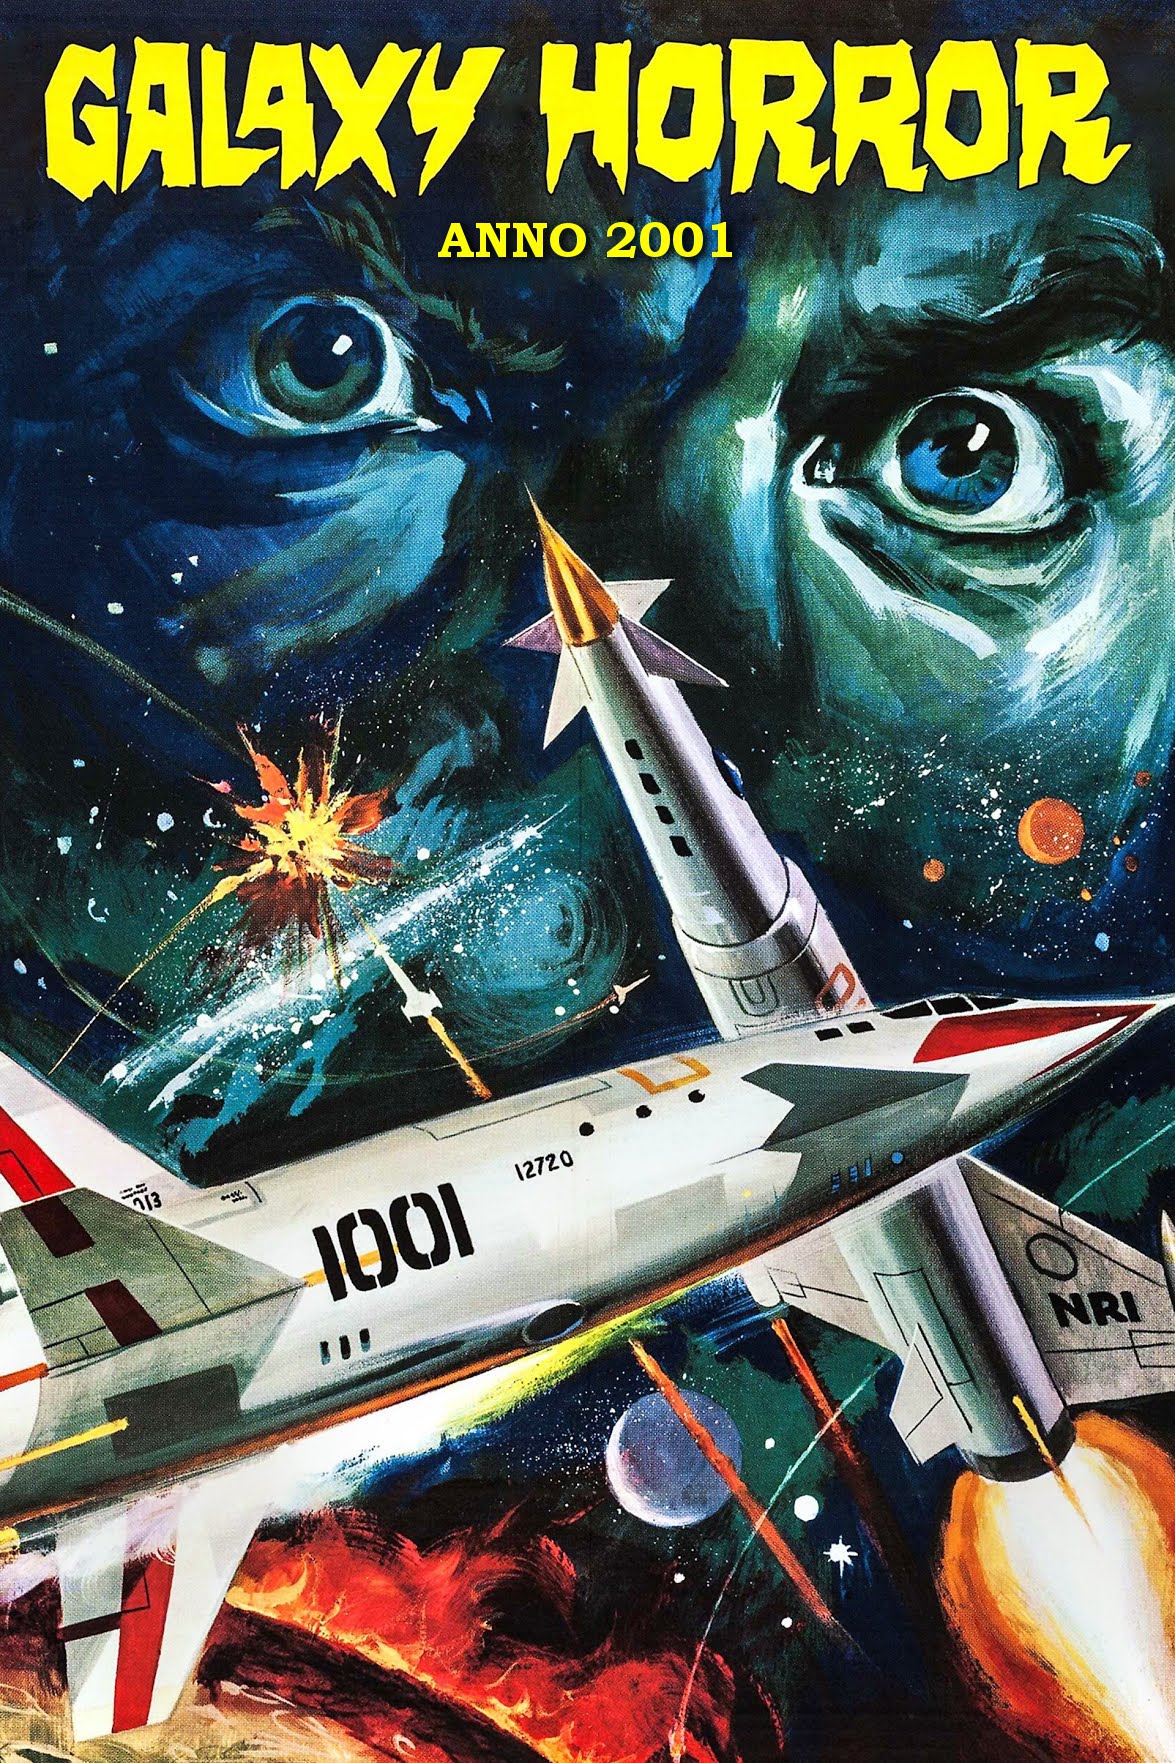 Galaxy Horror – Anno 2001 (1969)